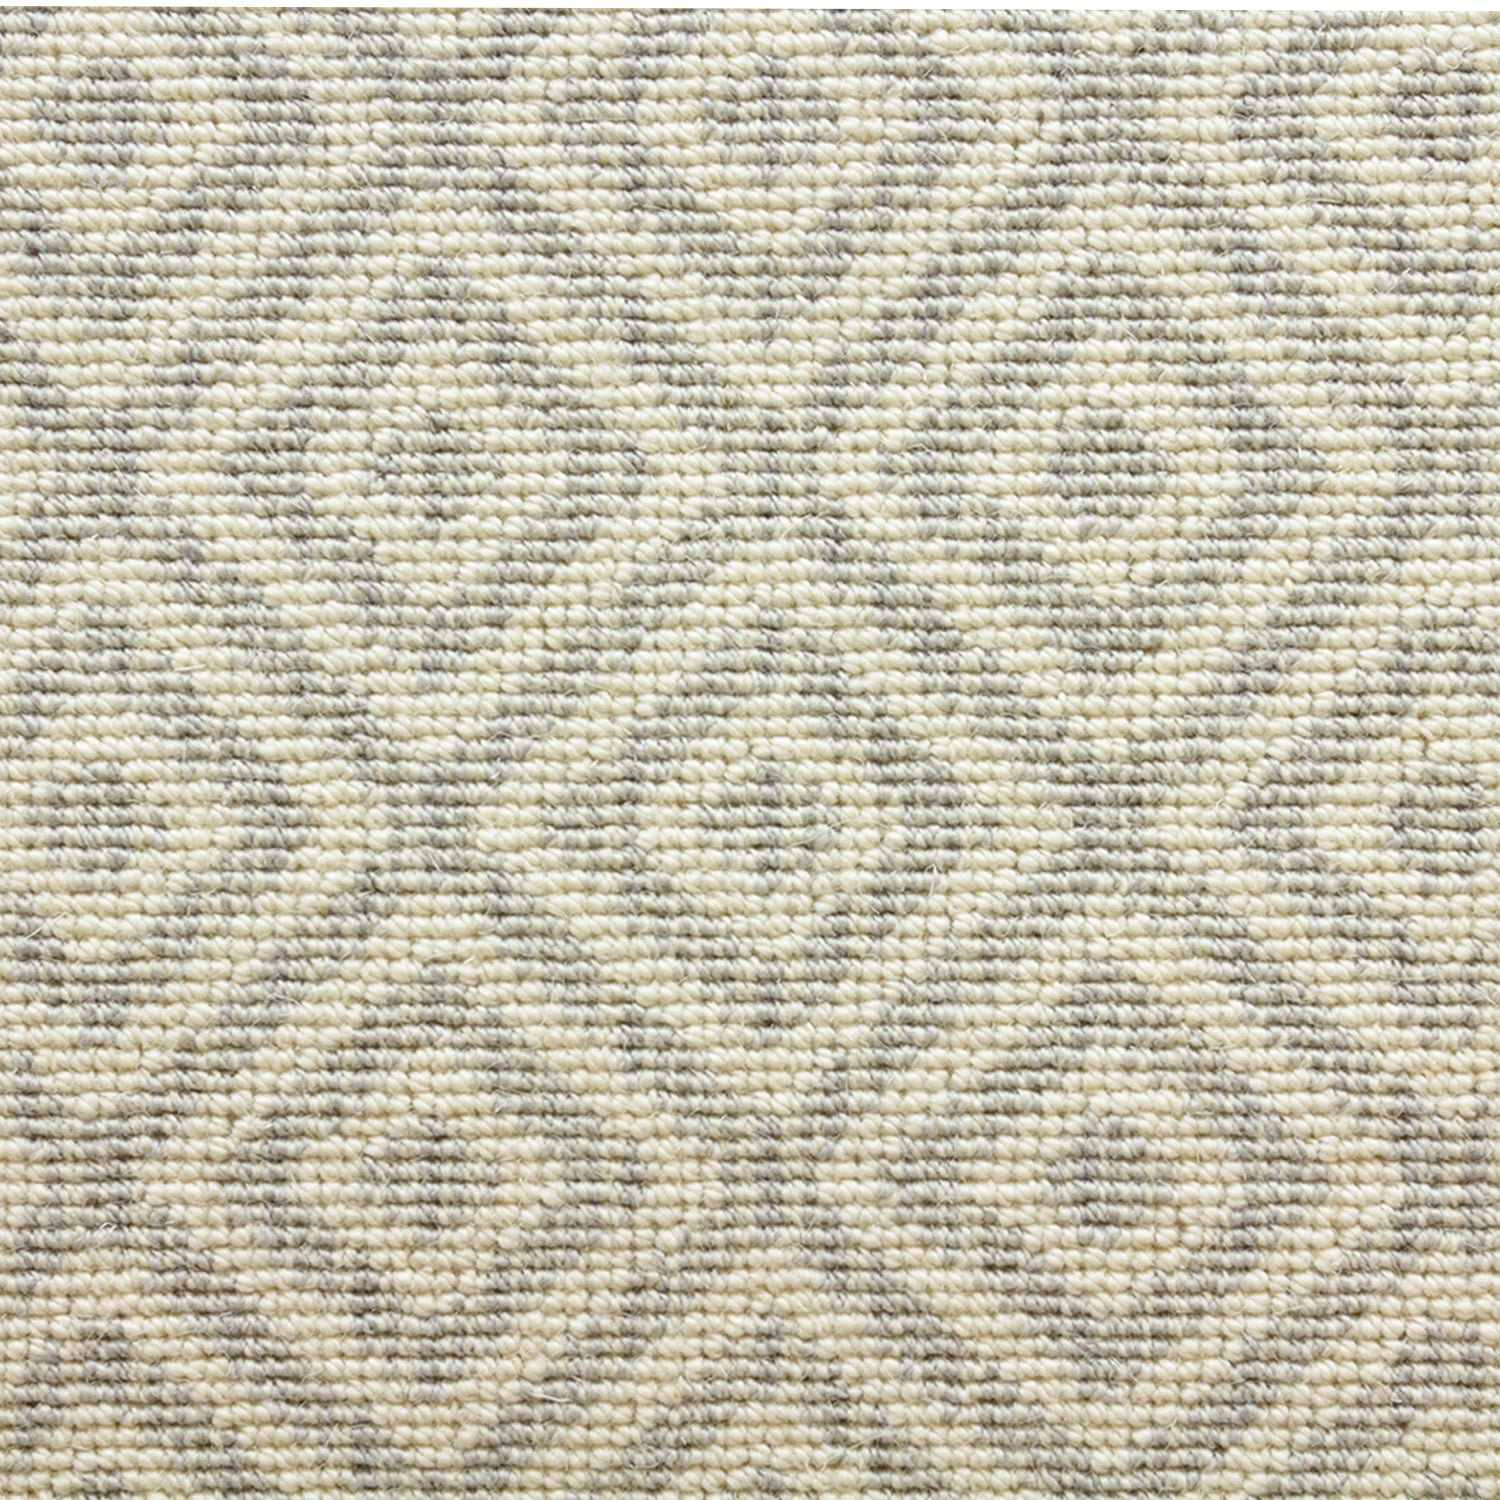 Wool-blend broadloom carpet swatch in a repeating diamond print in light gray on a cream field.